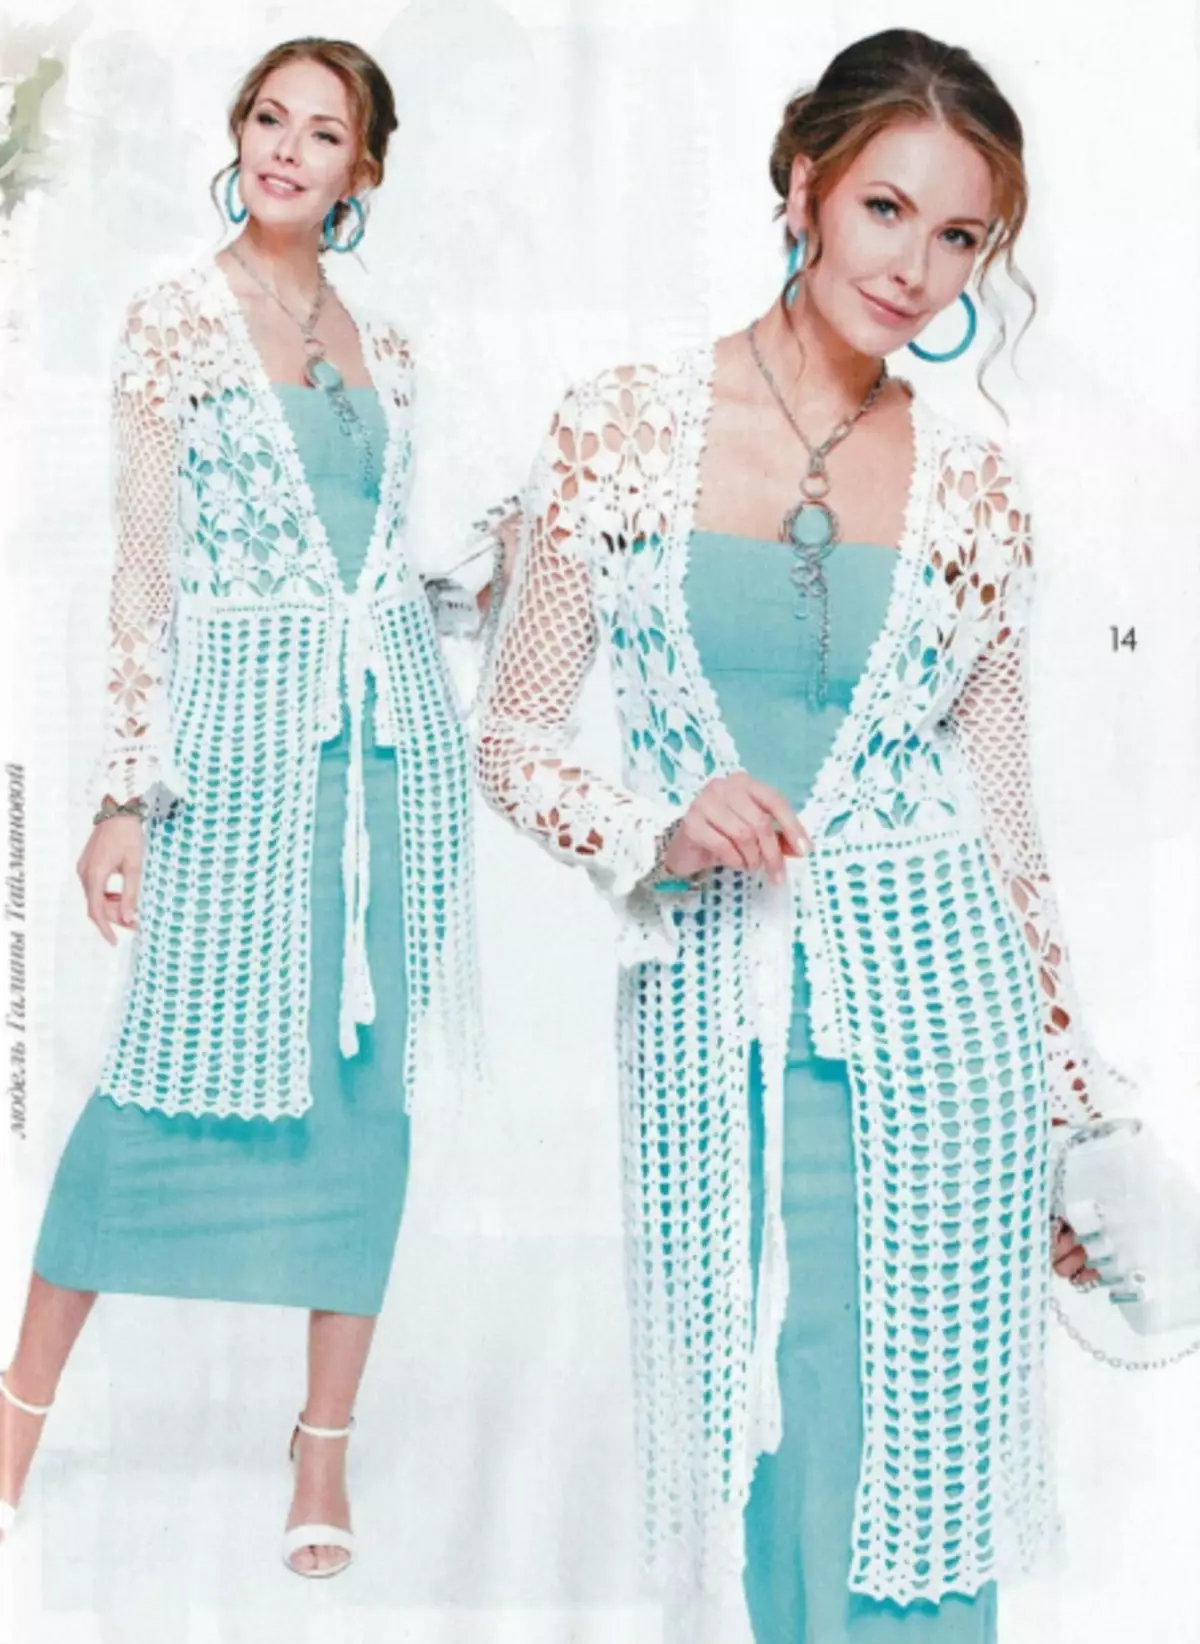 Majalah Fashion No. 609 - 2019. Masalah anyar